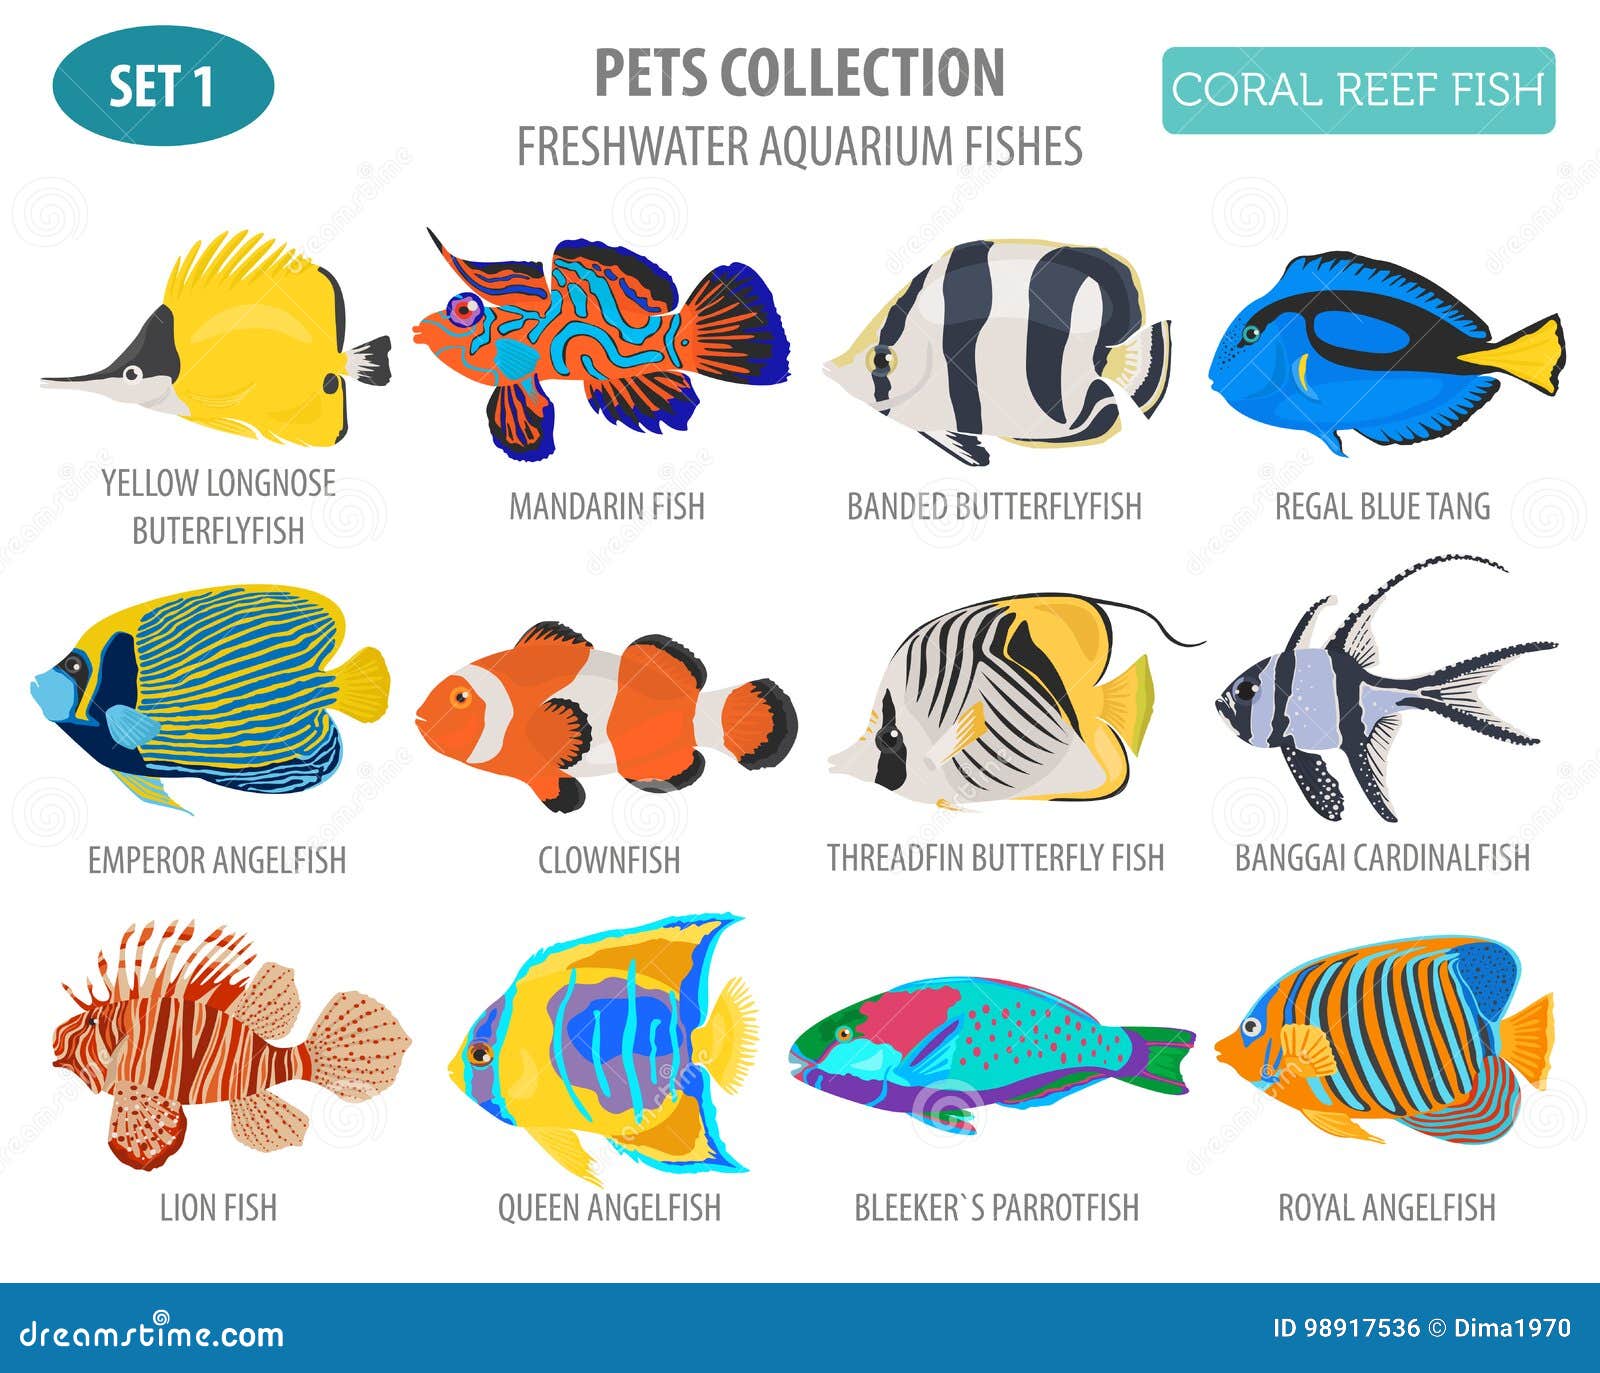 Freshwater Fish Identification Chart